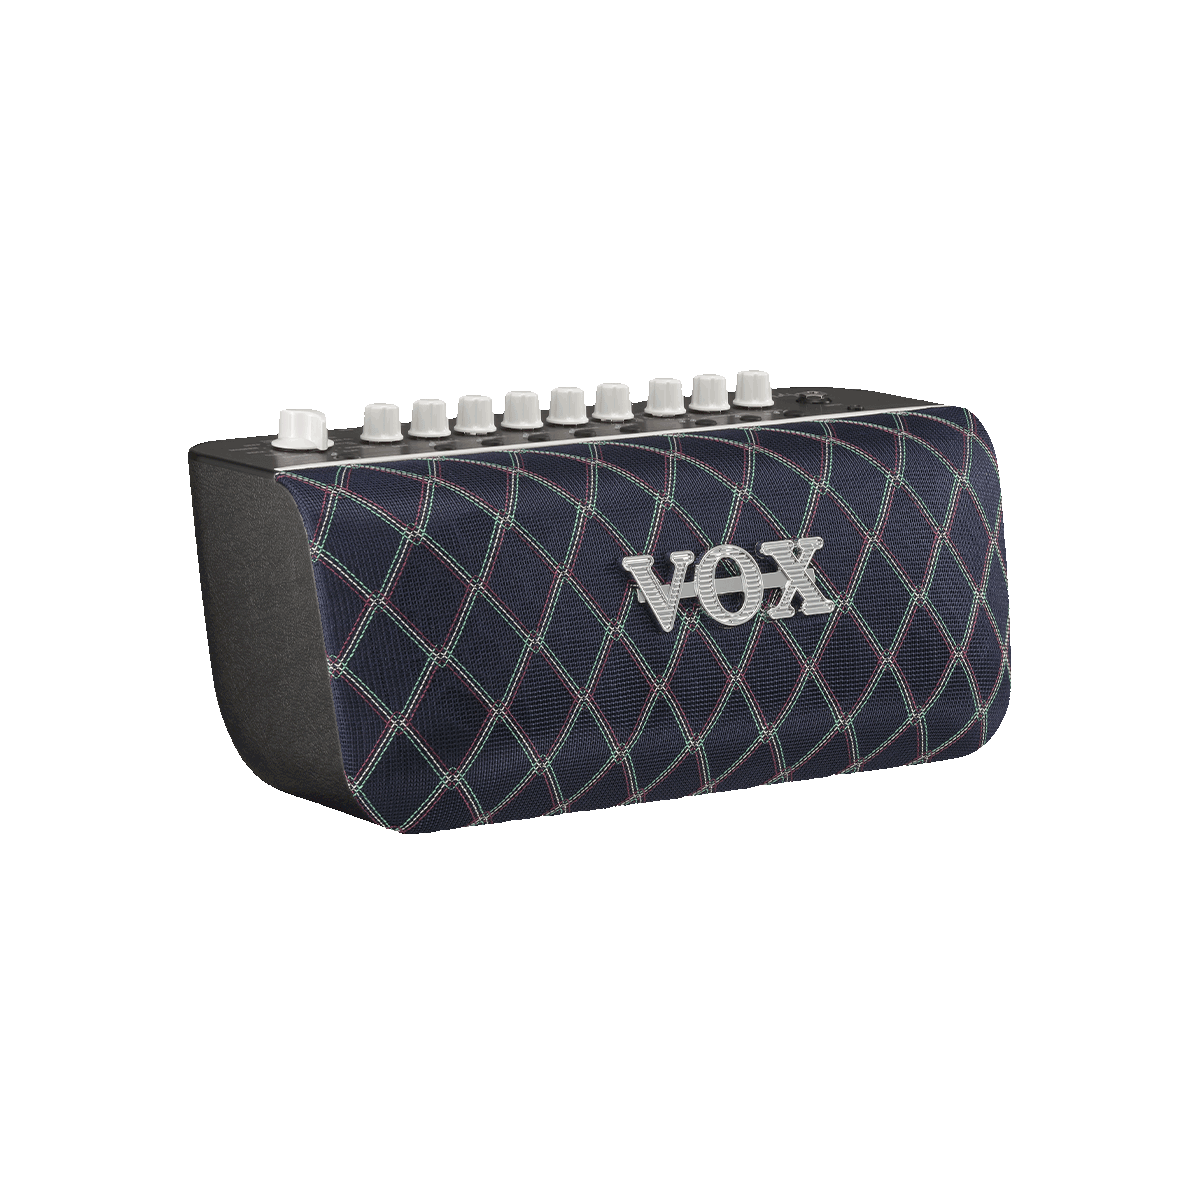 VOX Amps USA | ADIO Air Bluetooth Bass Amplifier | Shop Now